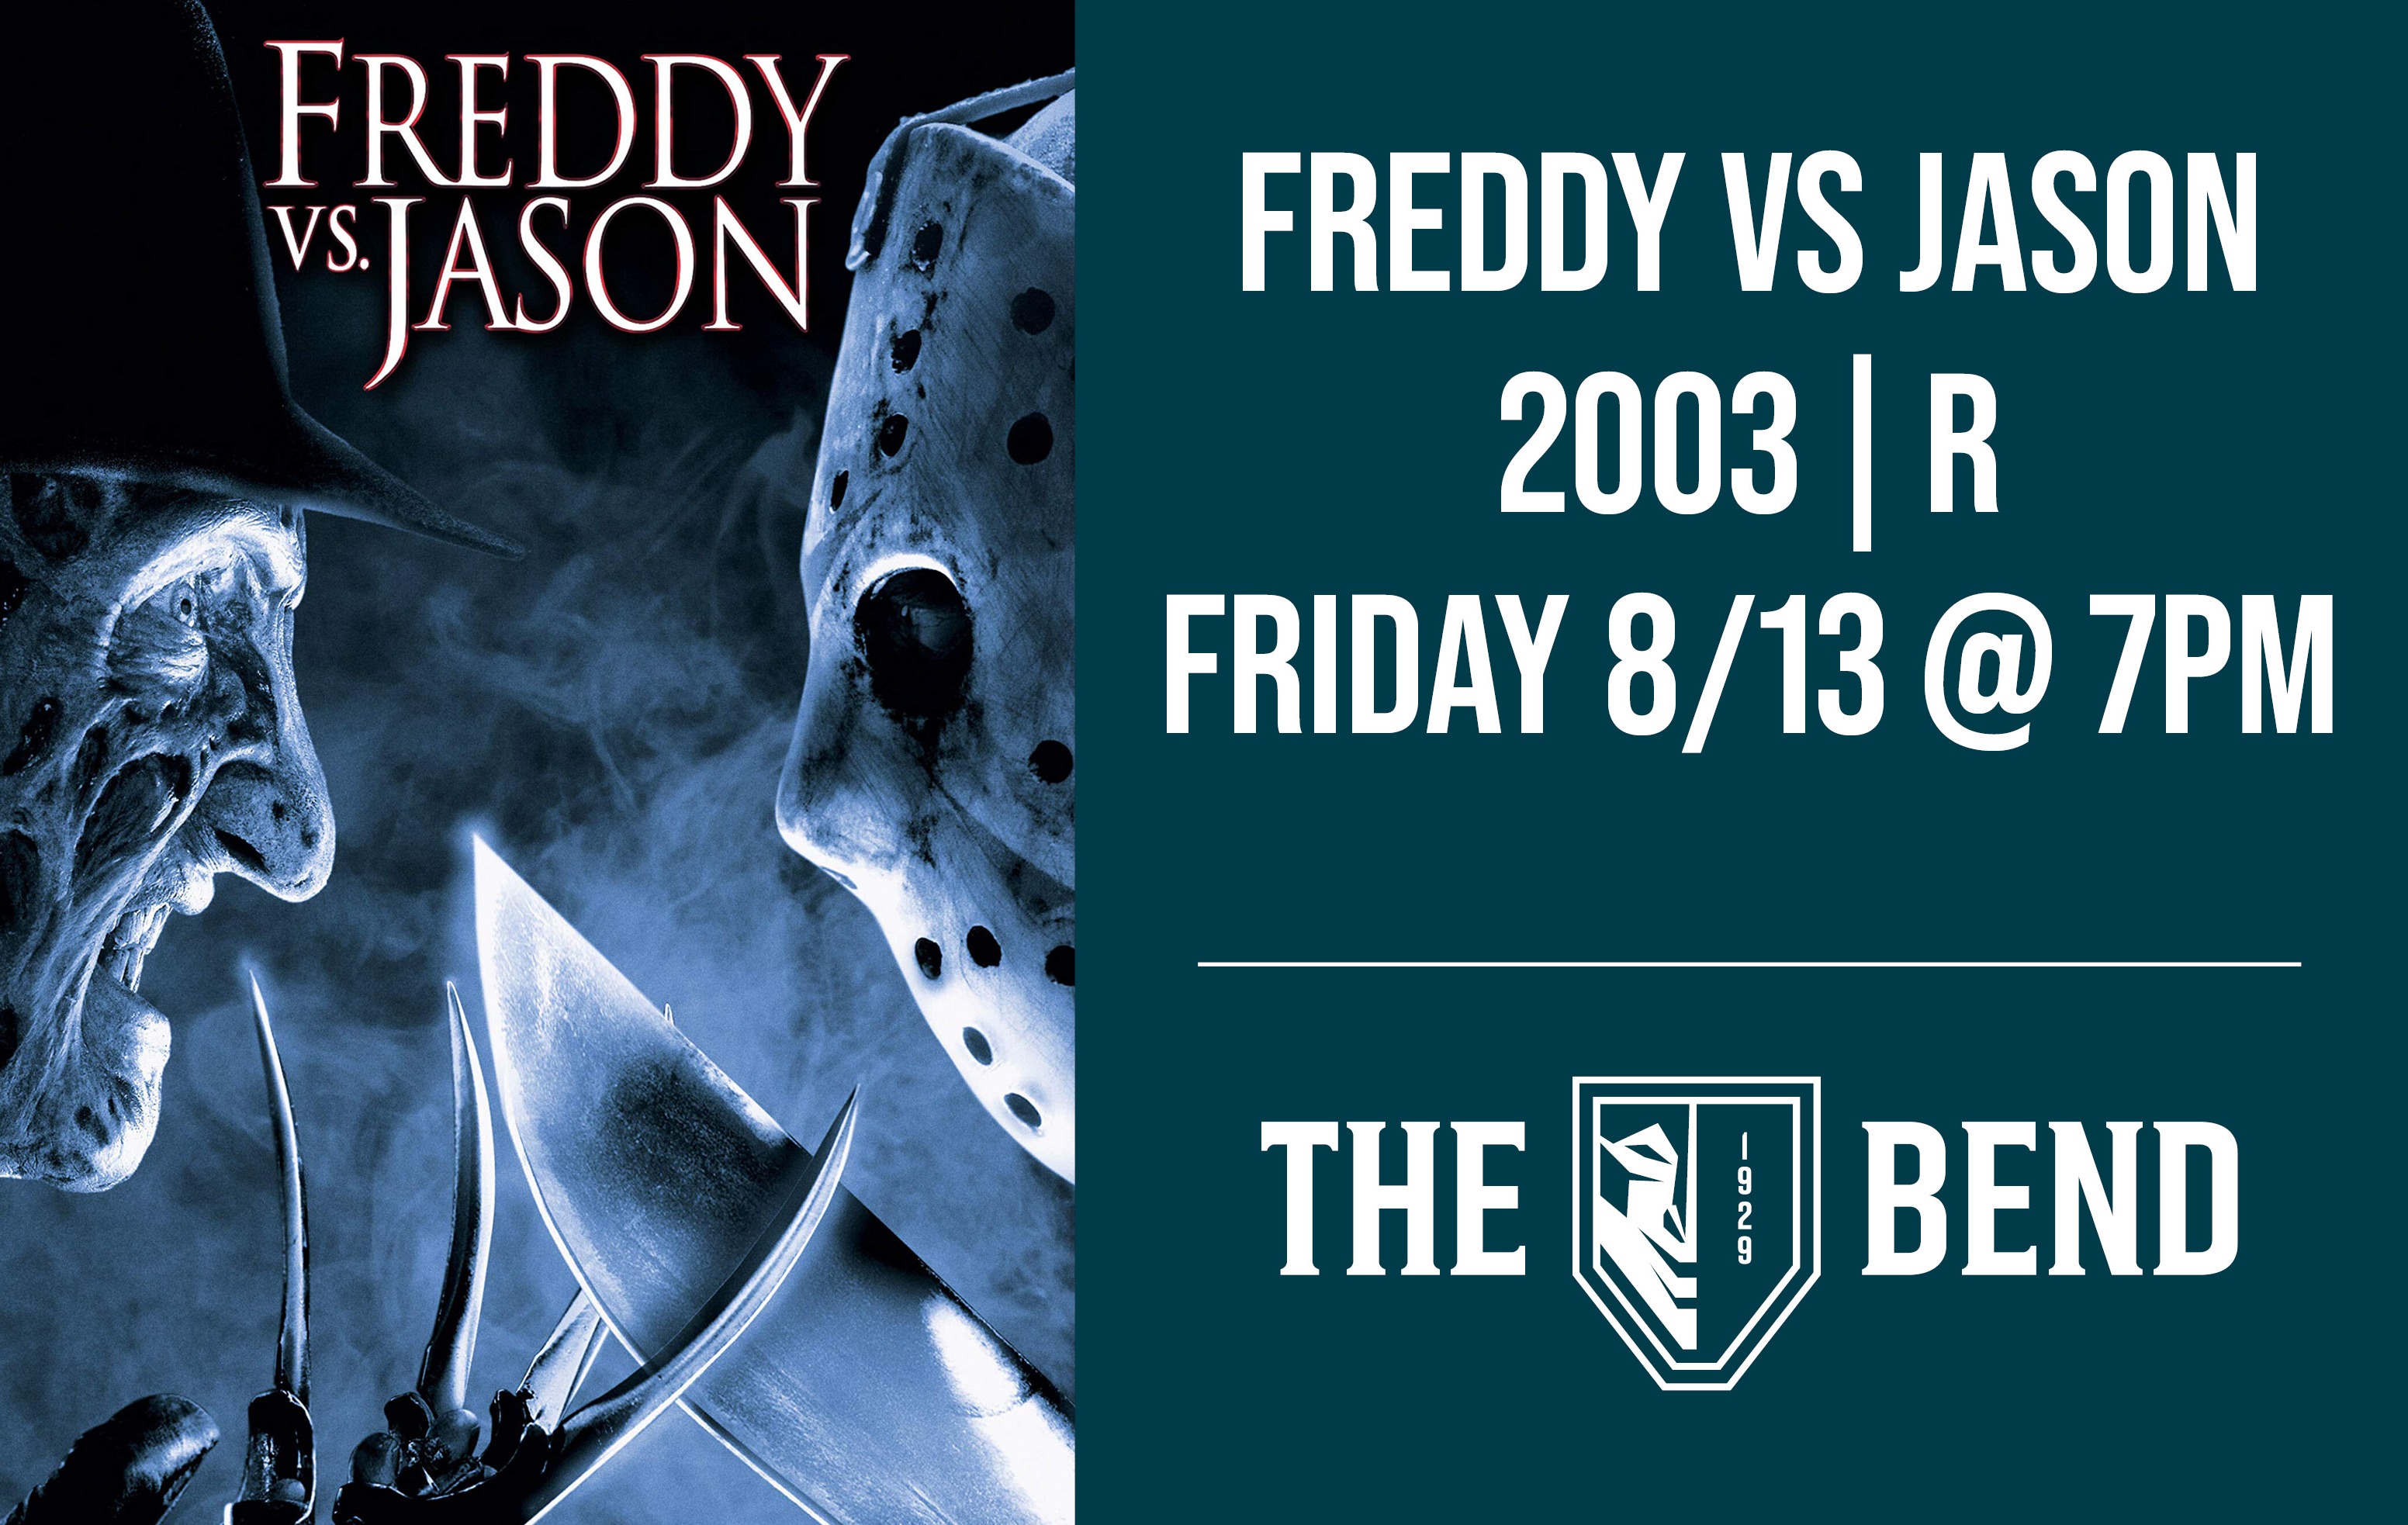 Freddy Vs Jason 2003 R Tickets The Bend